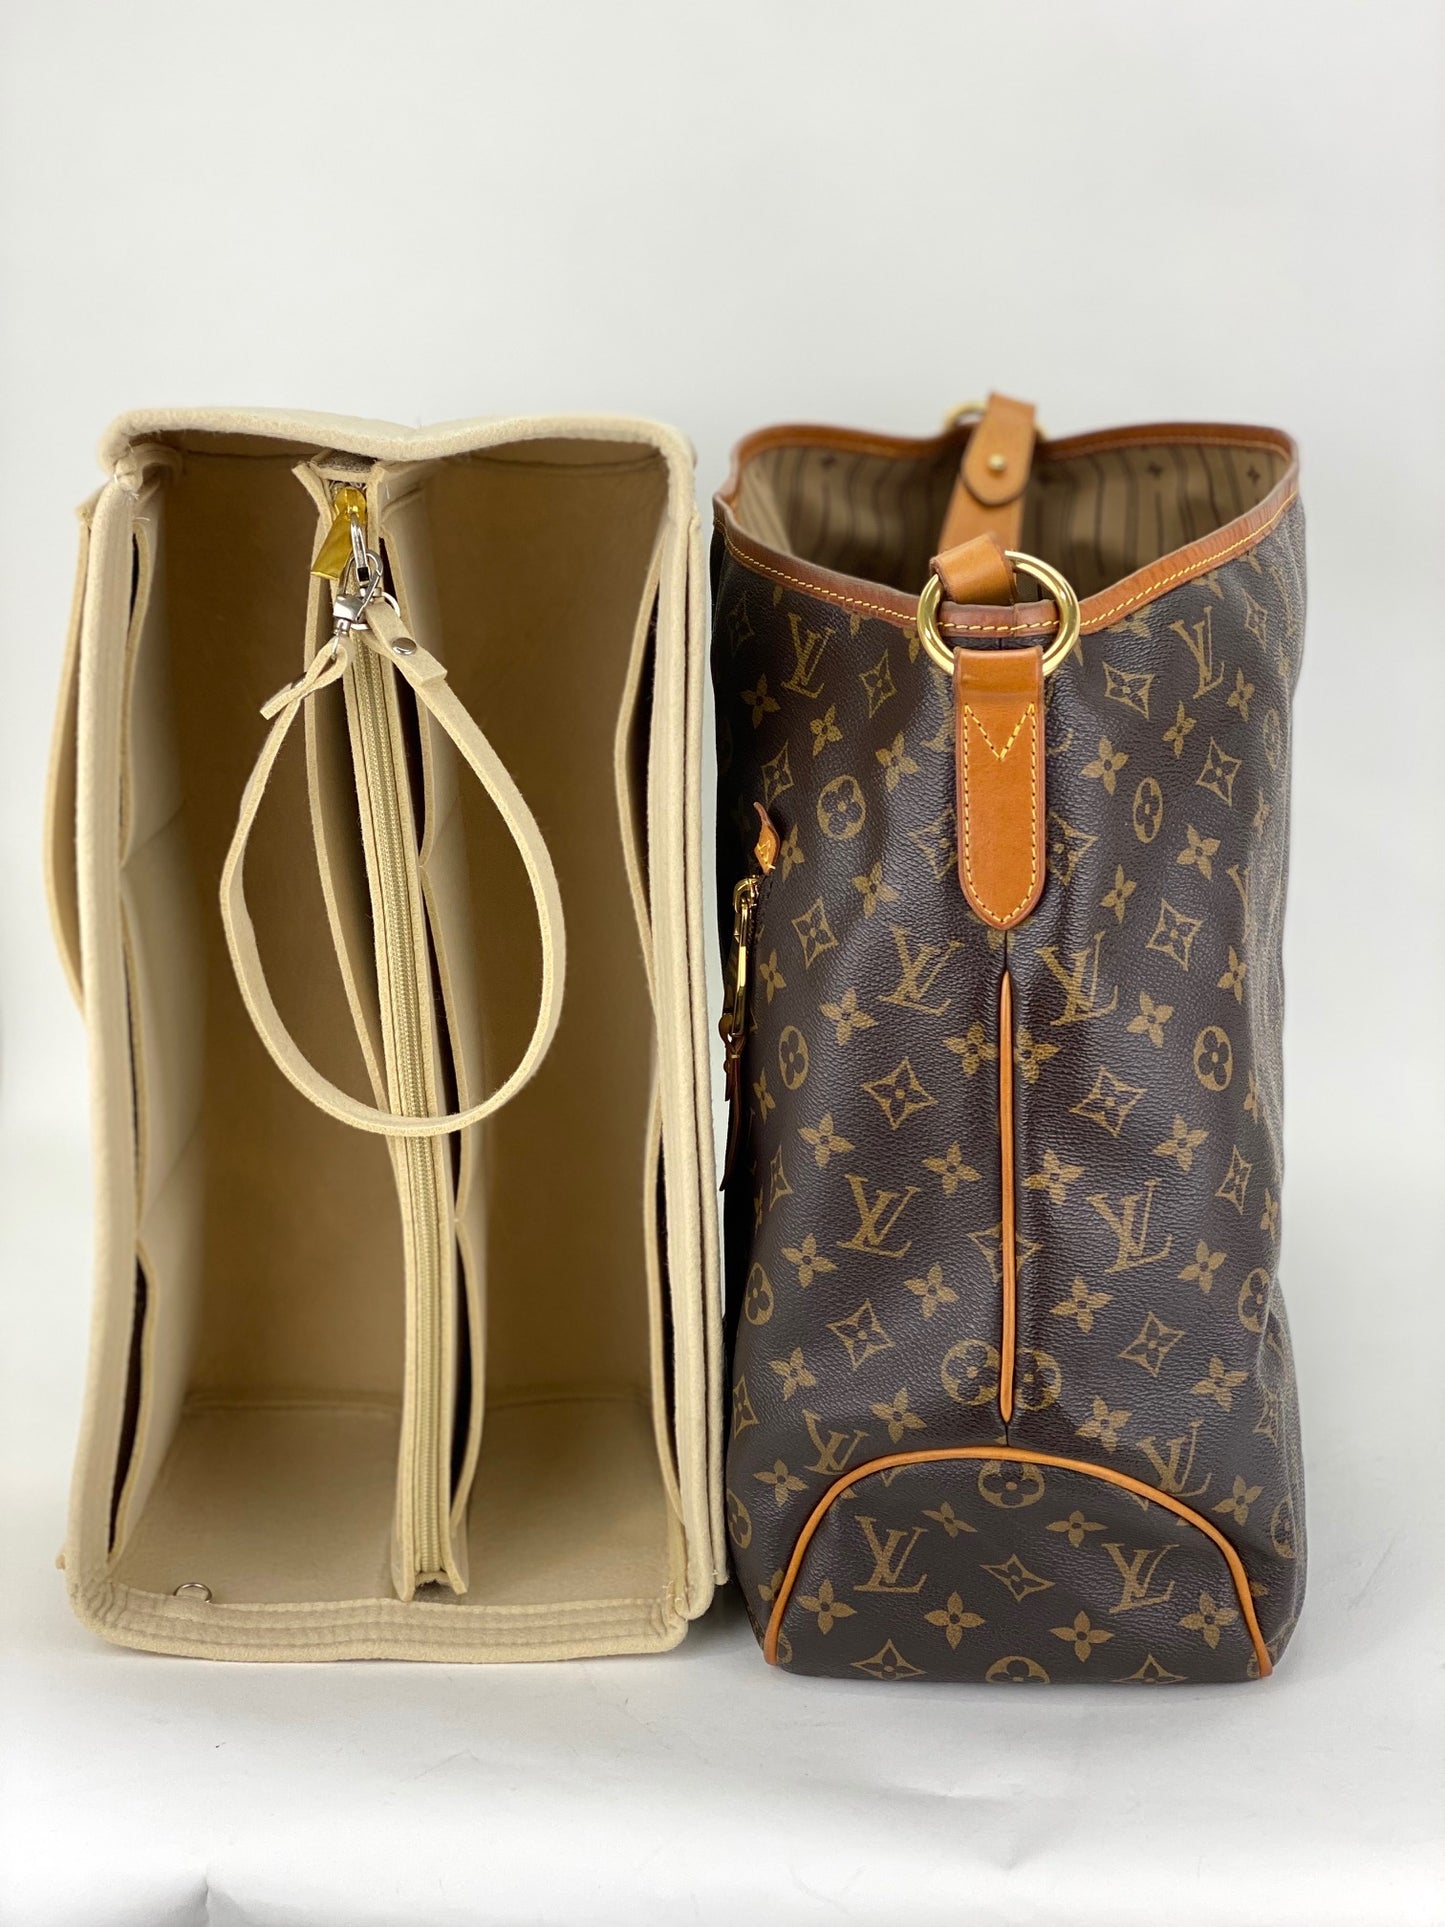 Louis Vuitton Delightful Leather Handbag